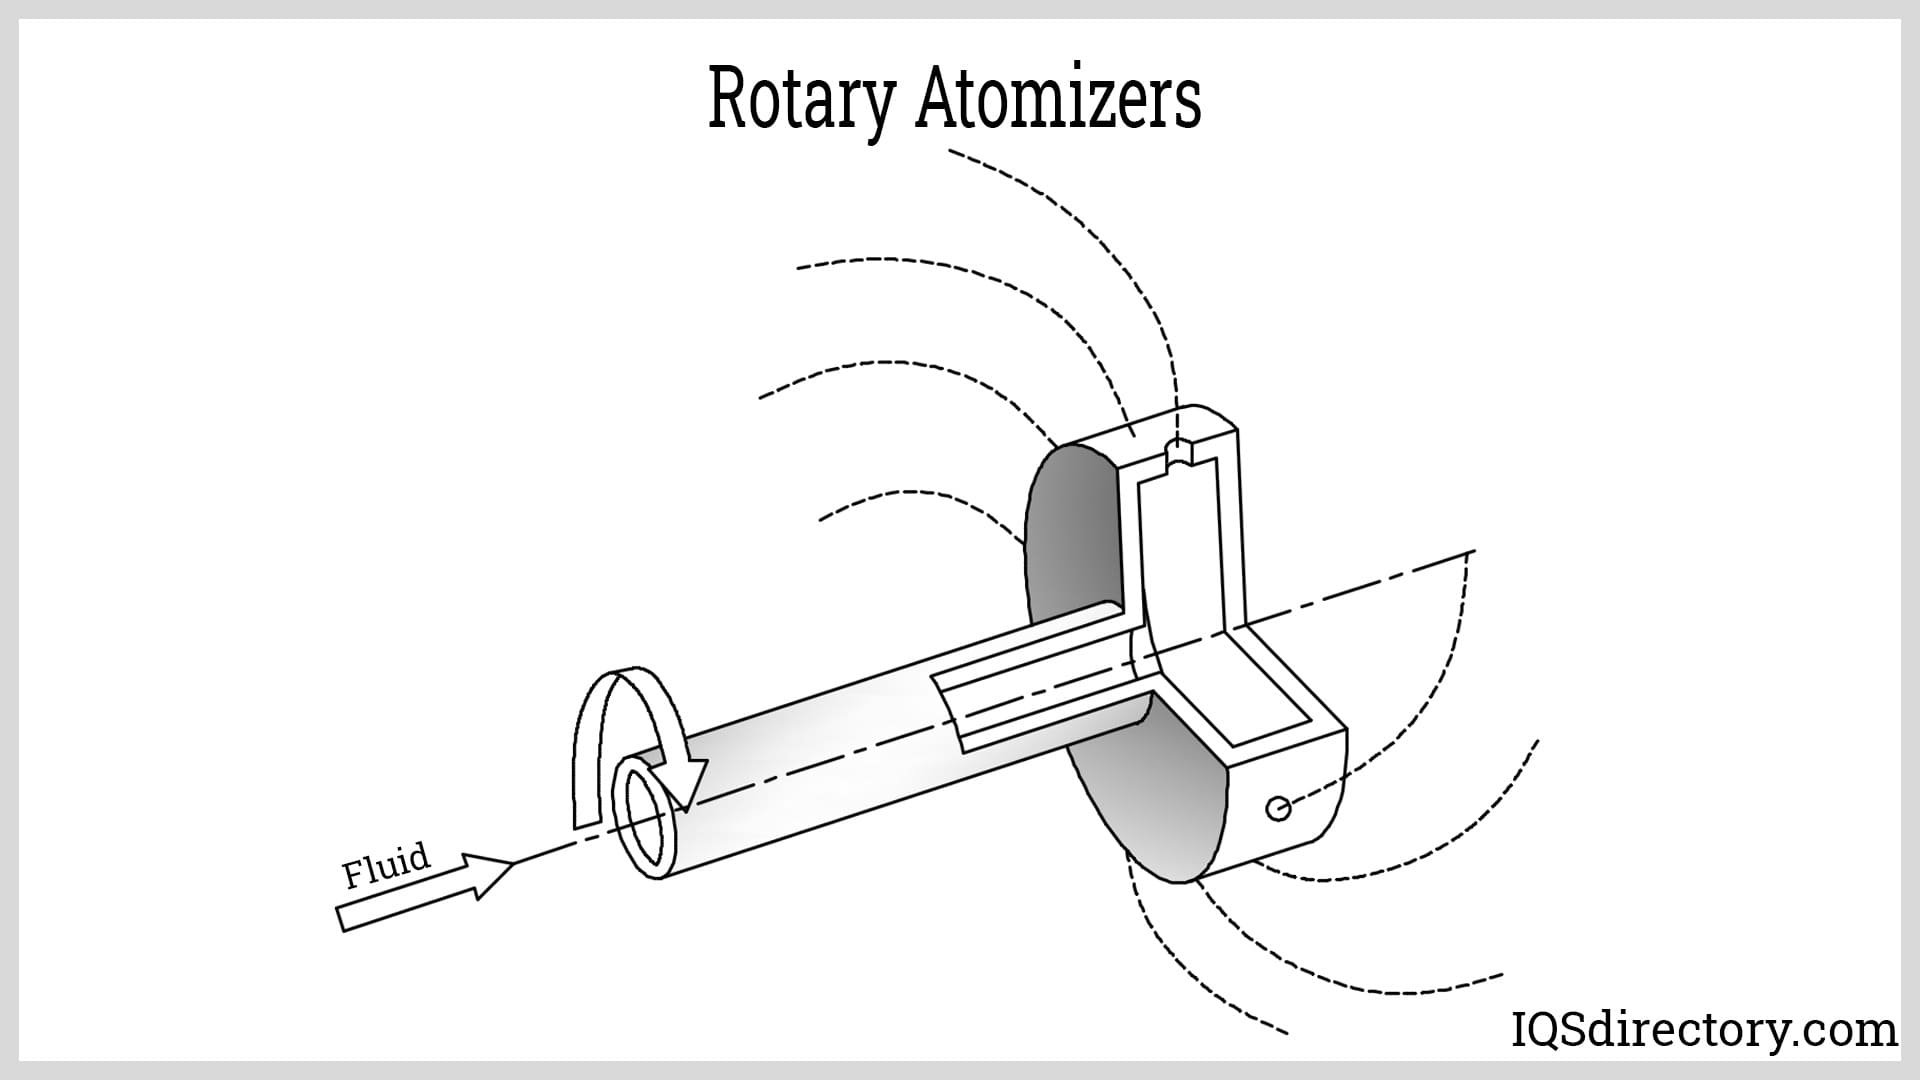 Rotary Atomizers